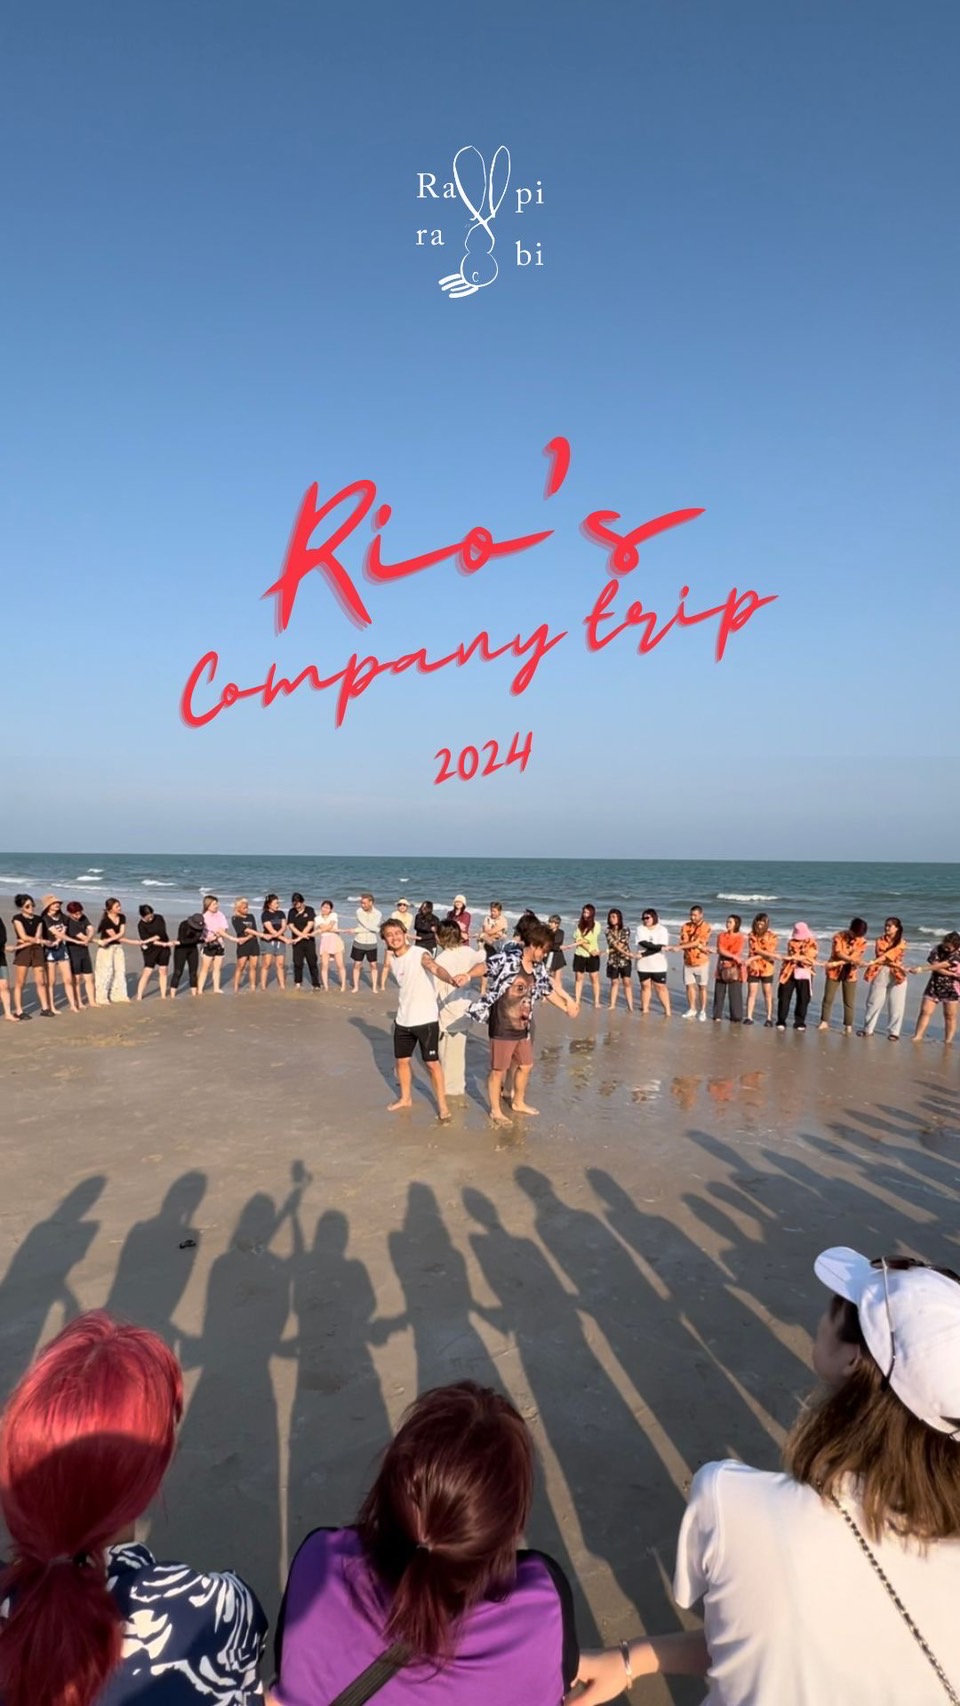 Rio's company trip 2024🏖 By Rapi-rabi